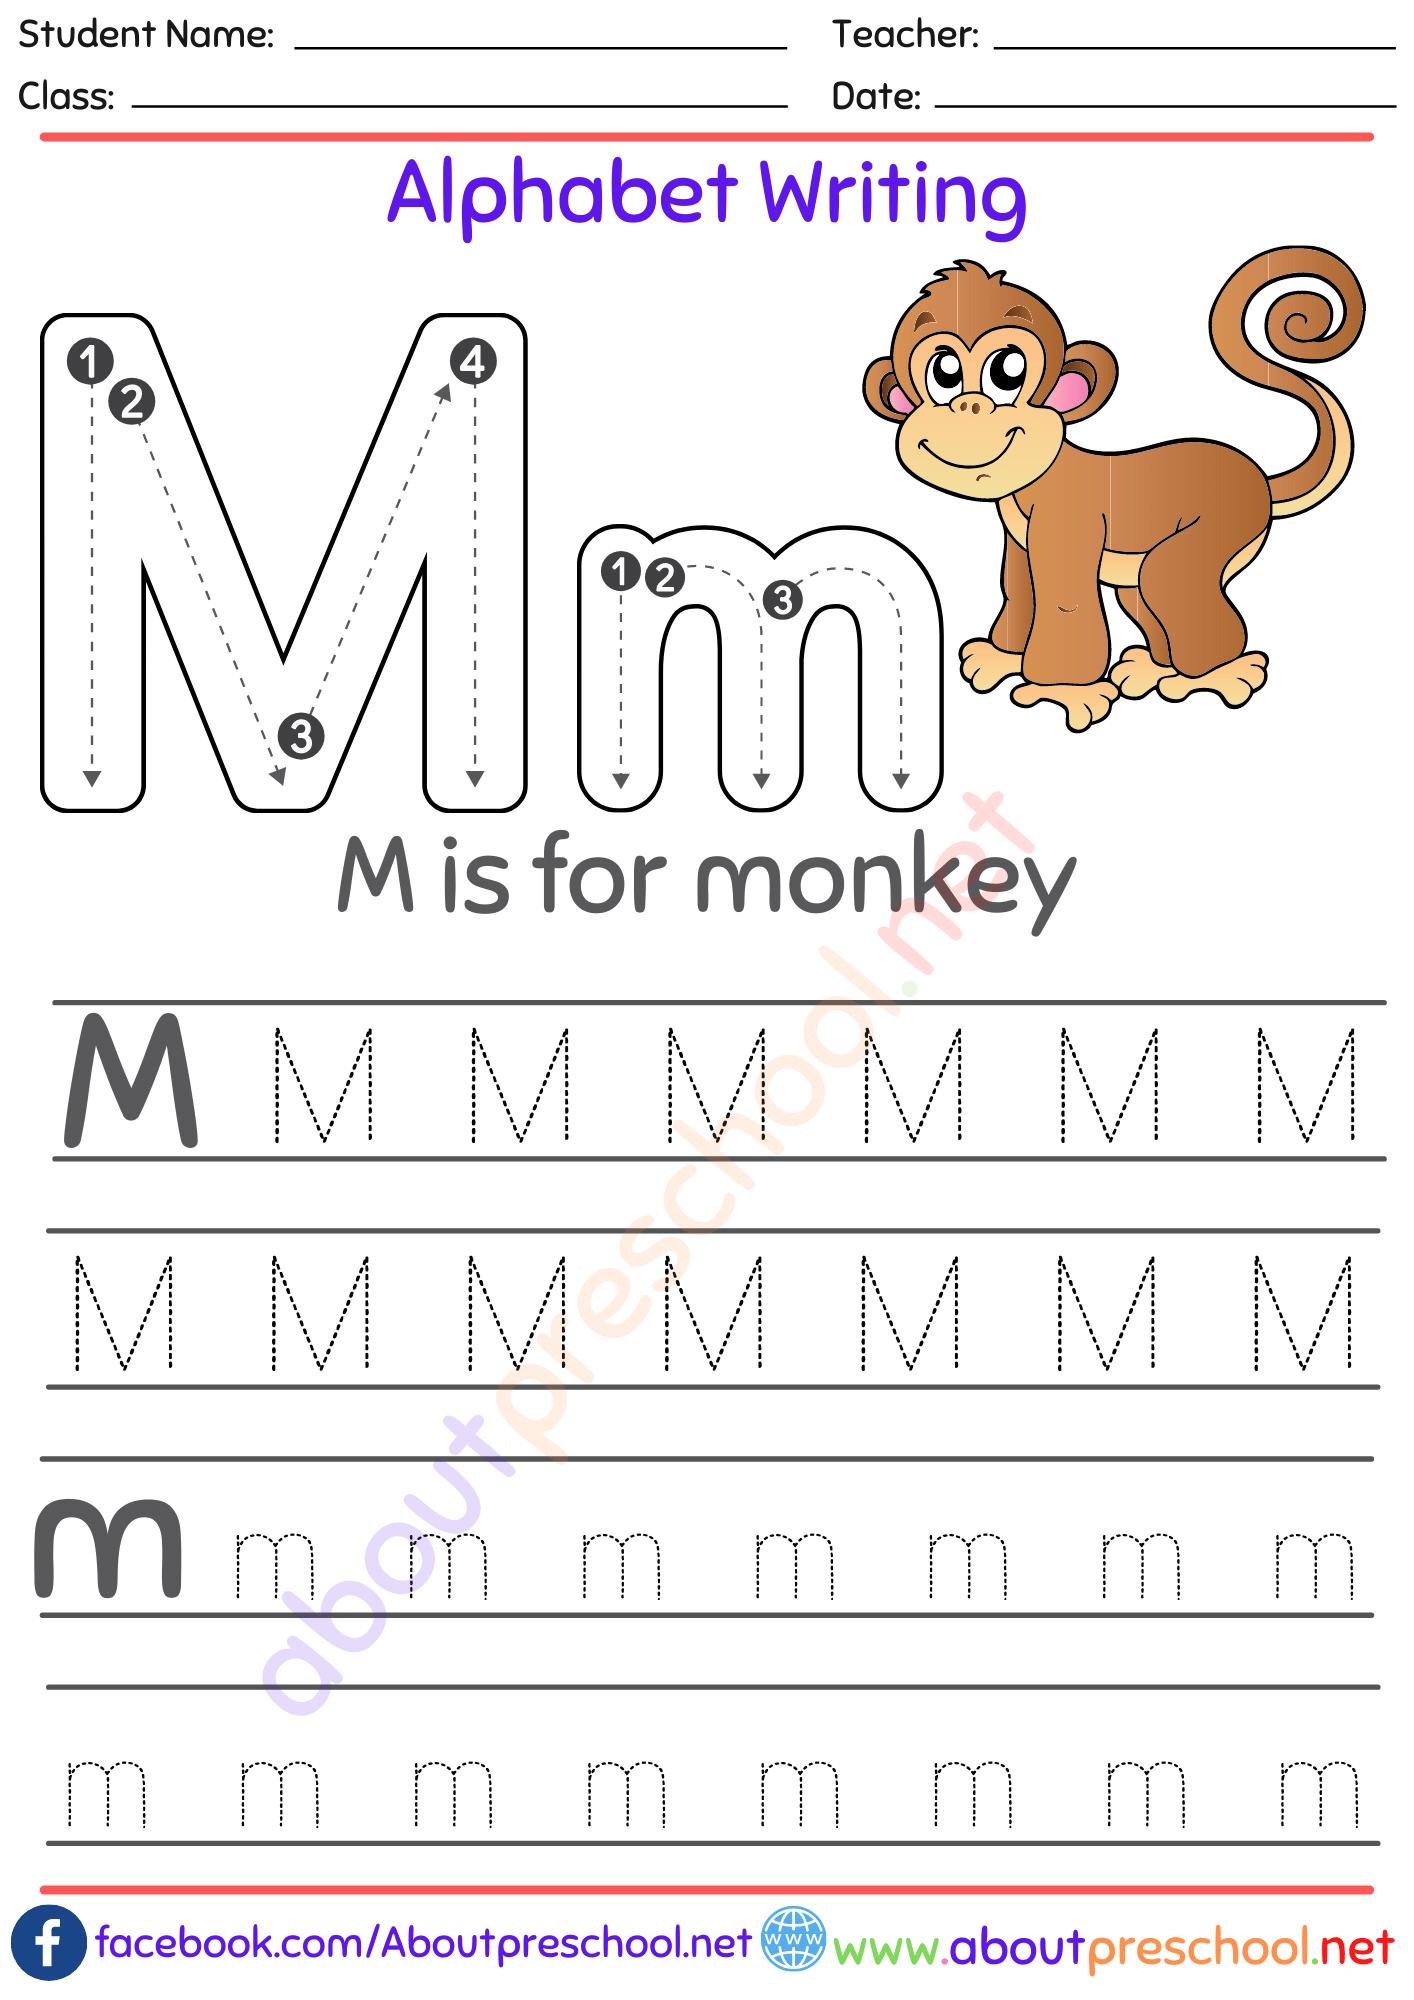 Alphabet Writing Worksheet m